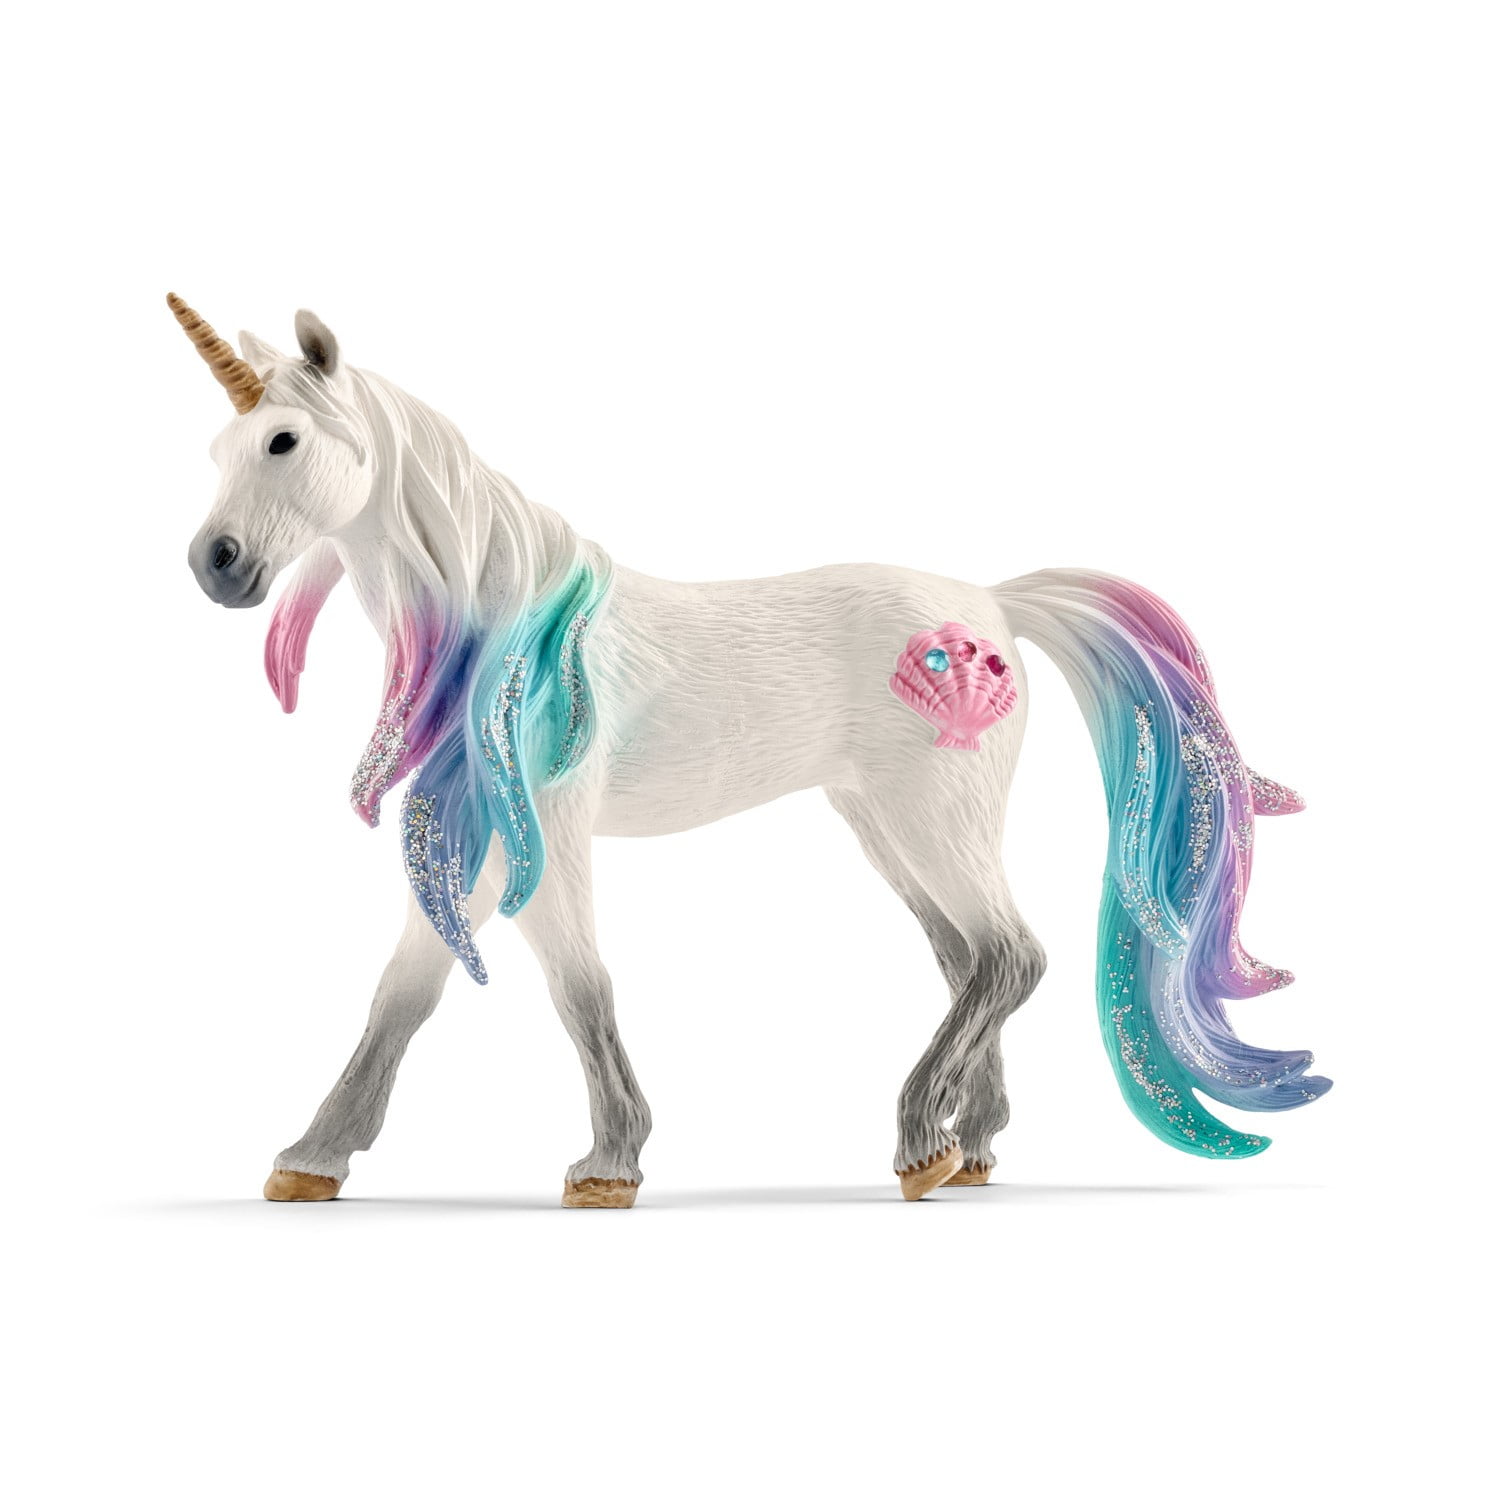 Schleich UNICORN PEGASUS FOAL horse animal solid plastic toy fantasy pet NEW 